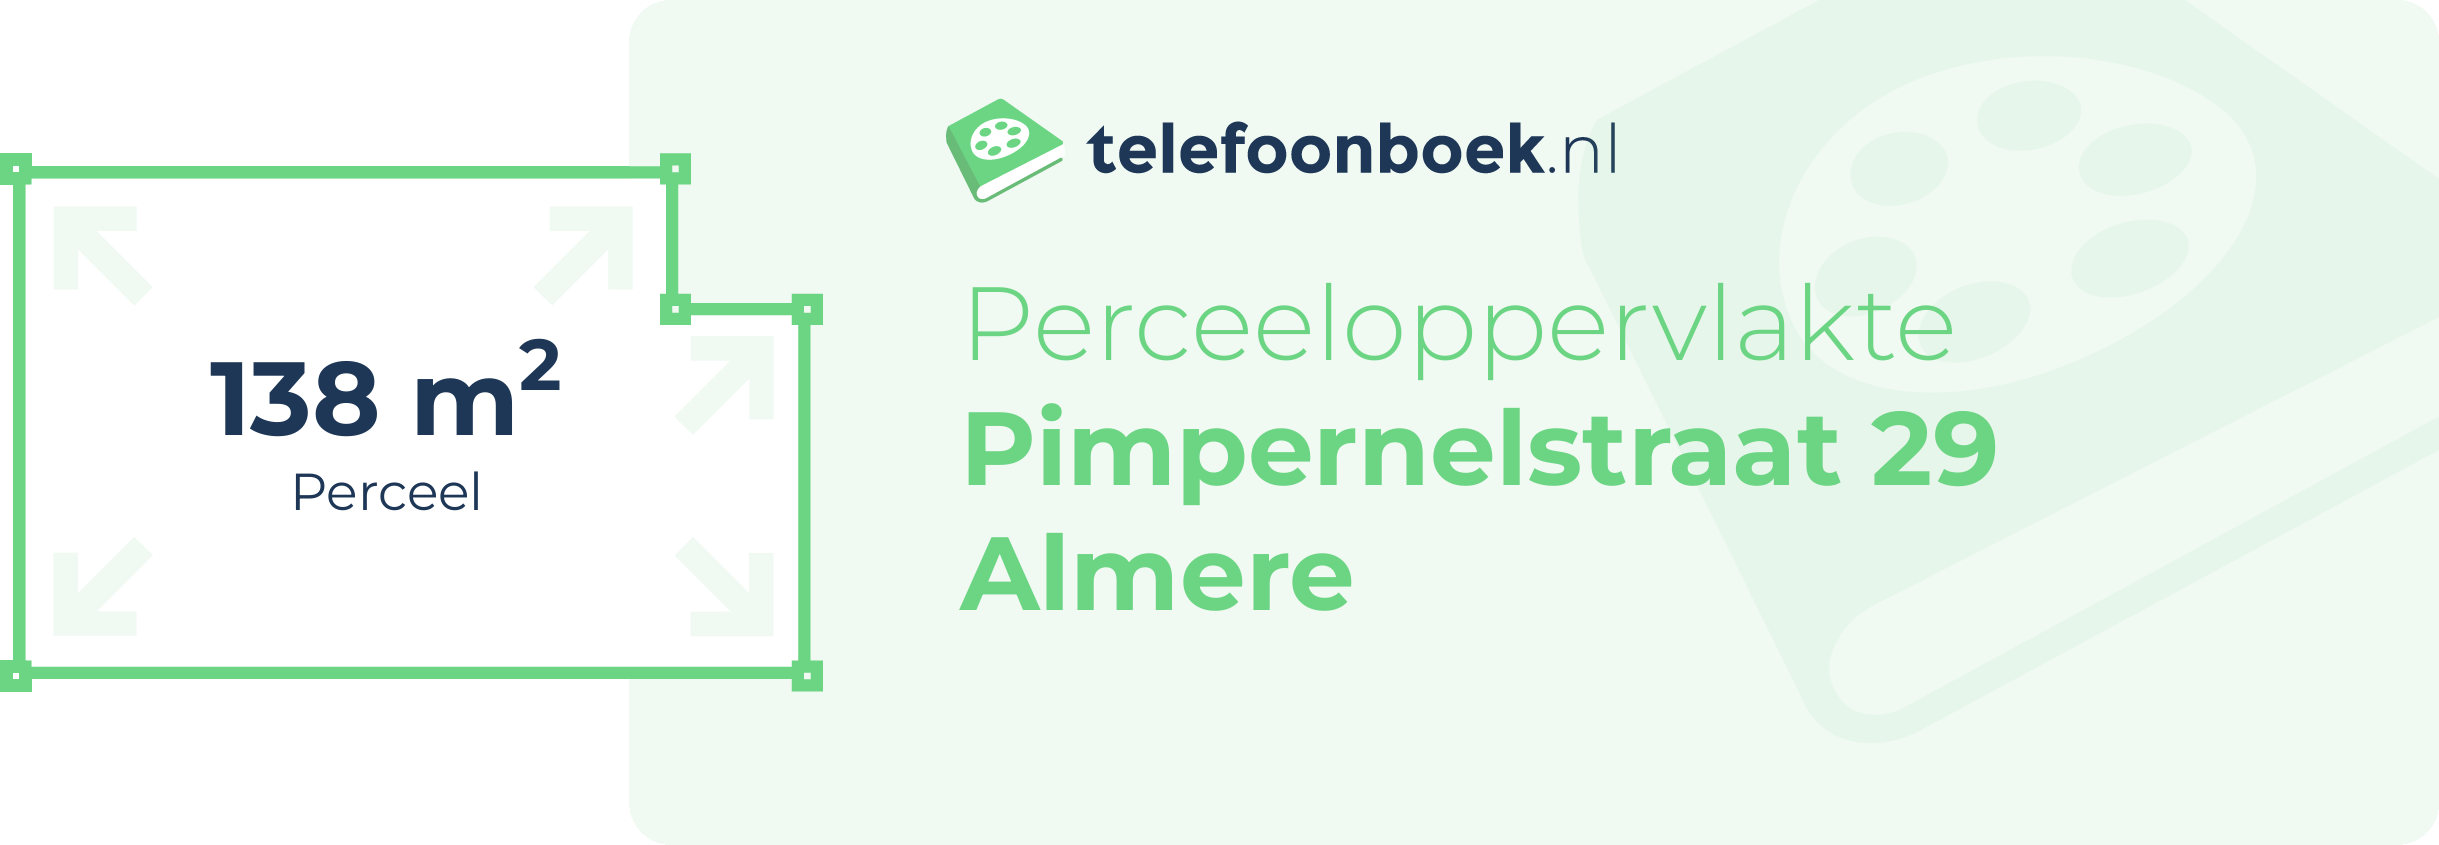 Perceeloppervlakte Pimpernelstraat 29 Almere